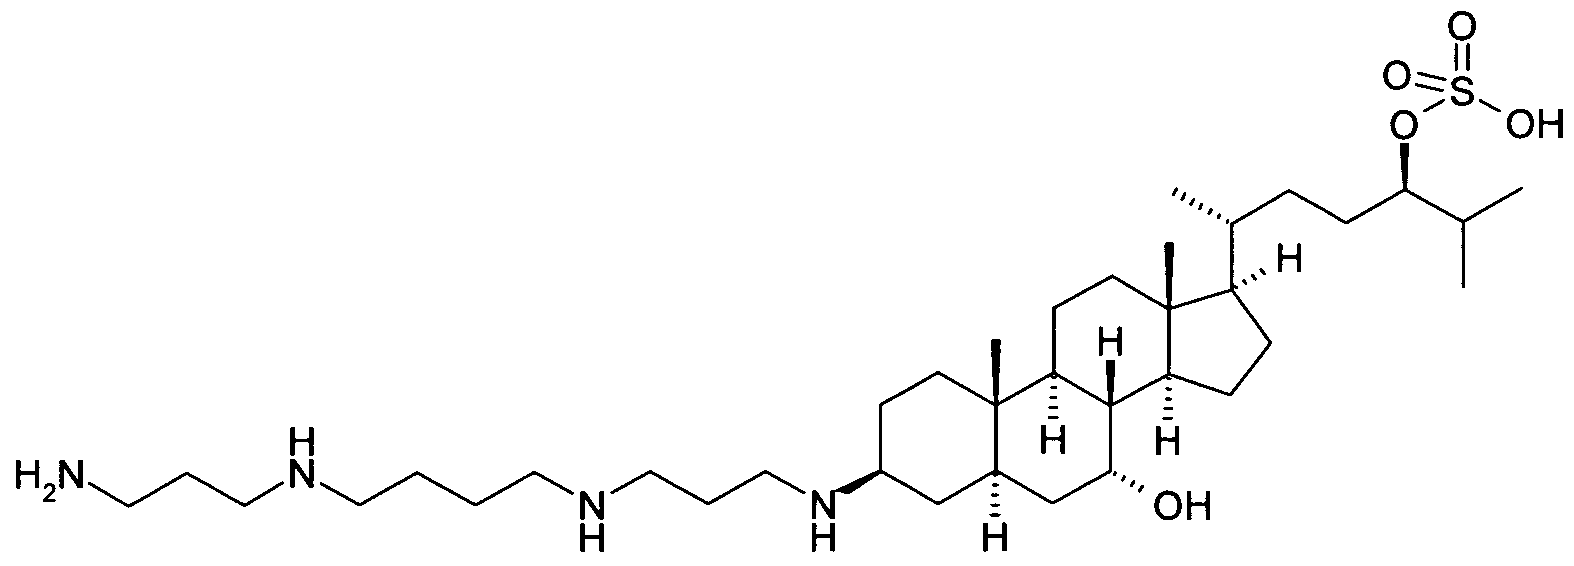 PTP1B 타겟 Trodusquemine 화학구조